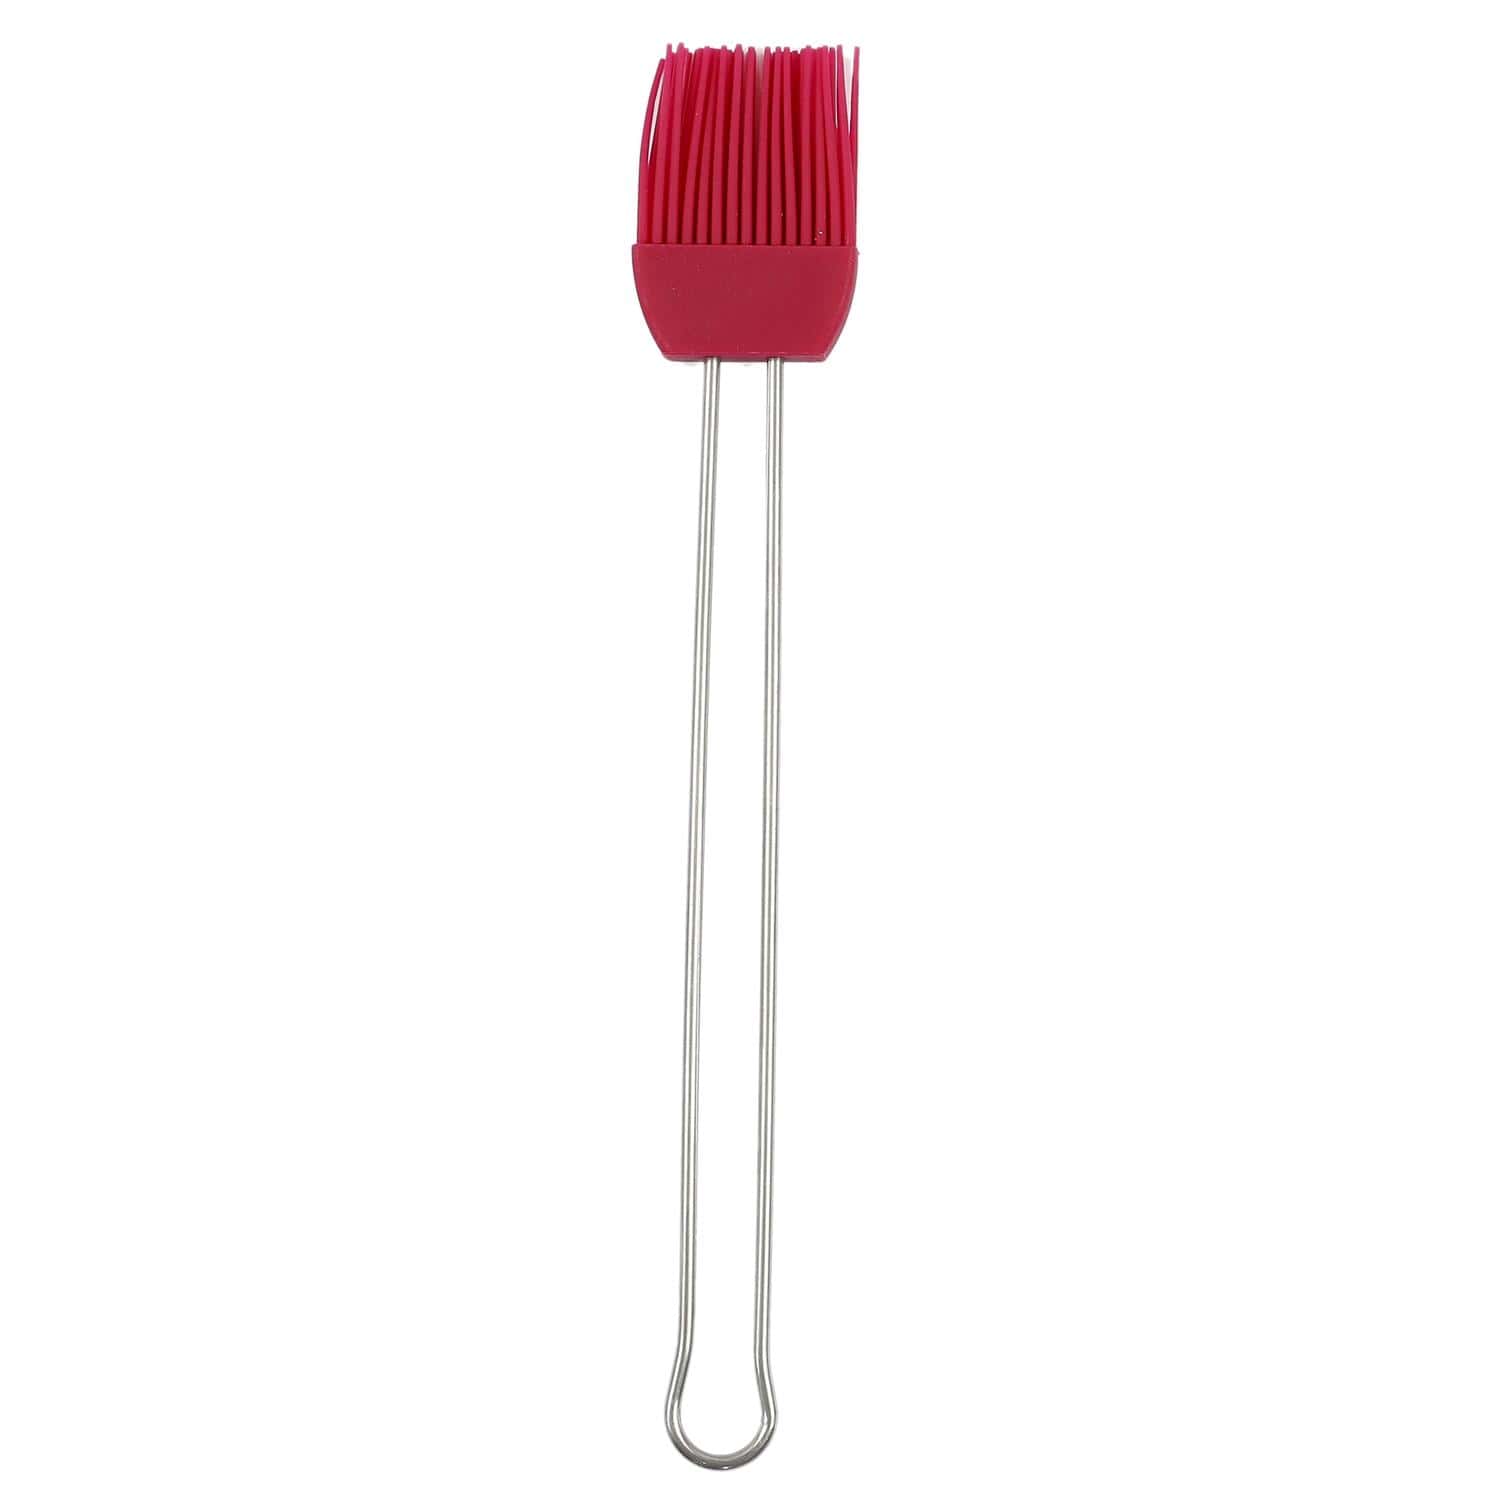 ustensile patisserie set spatule silicone fouet verre doseur lily cook KP5323 cuisine maison pinceau rouge 04